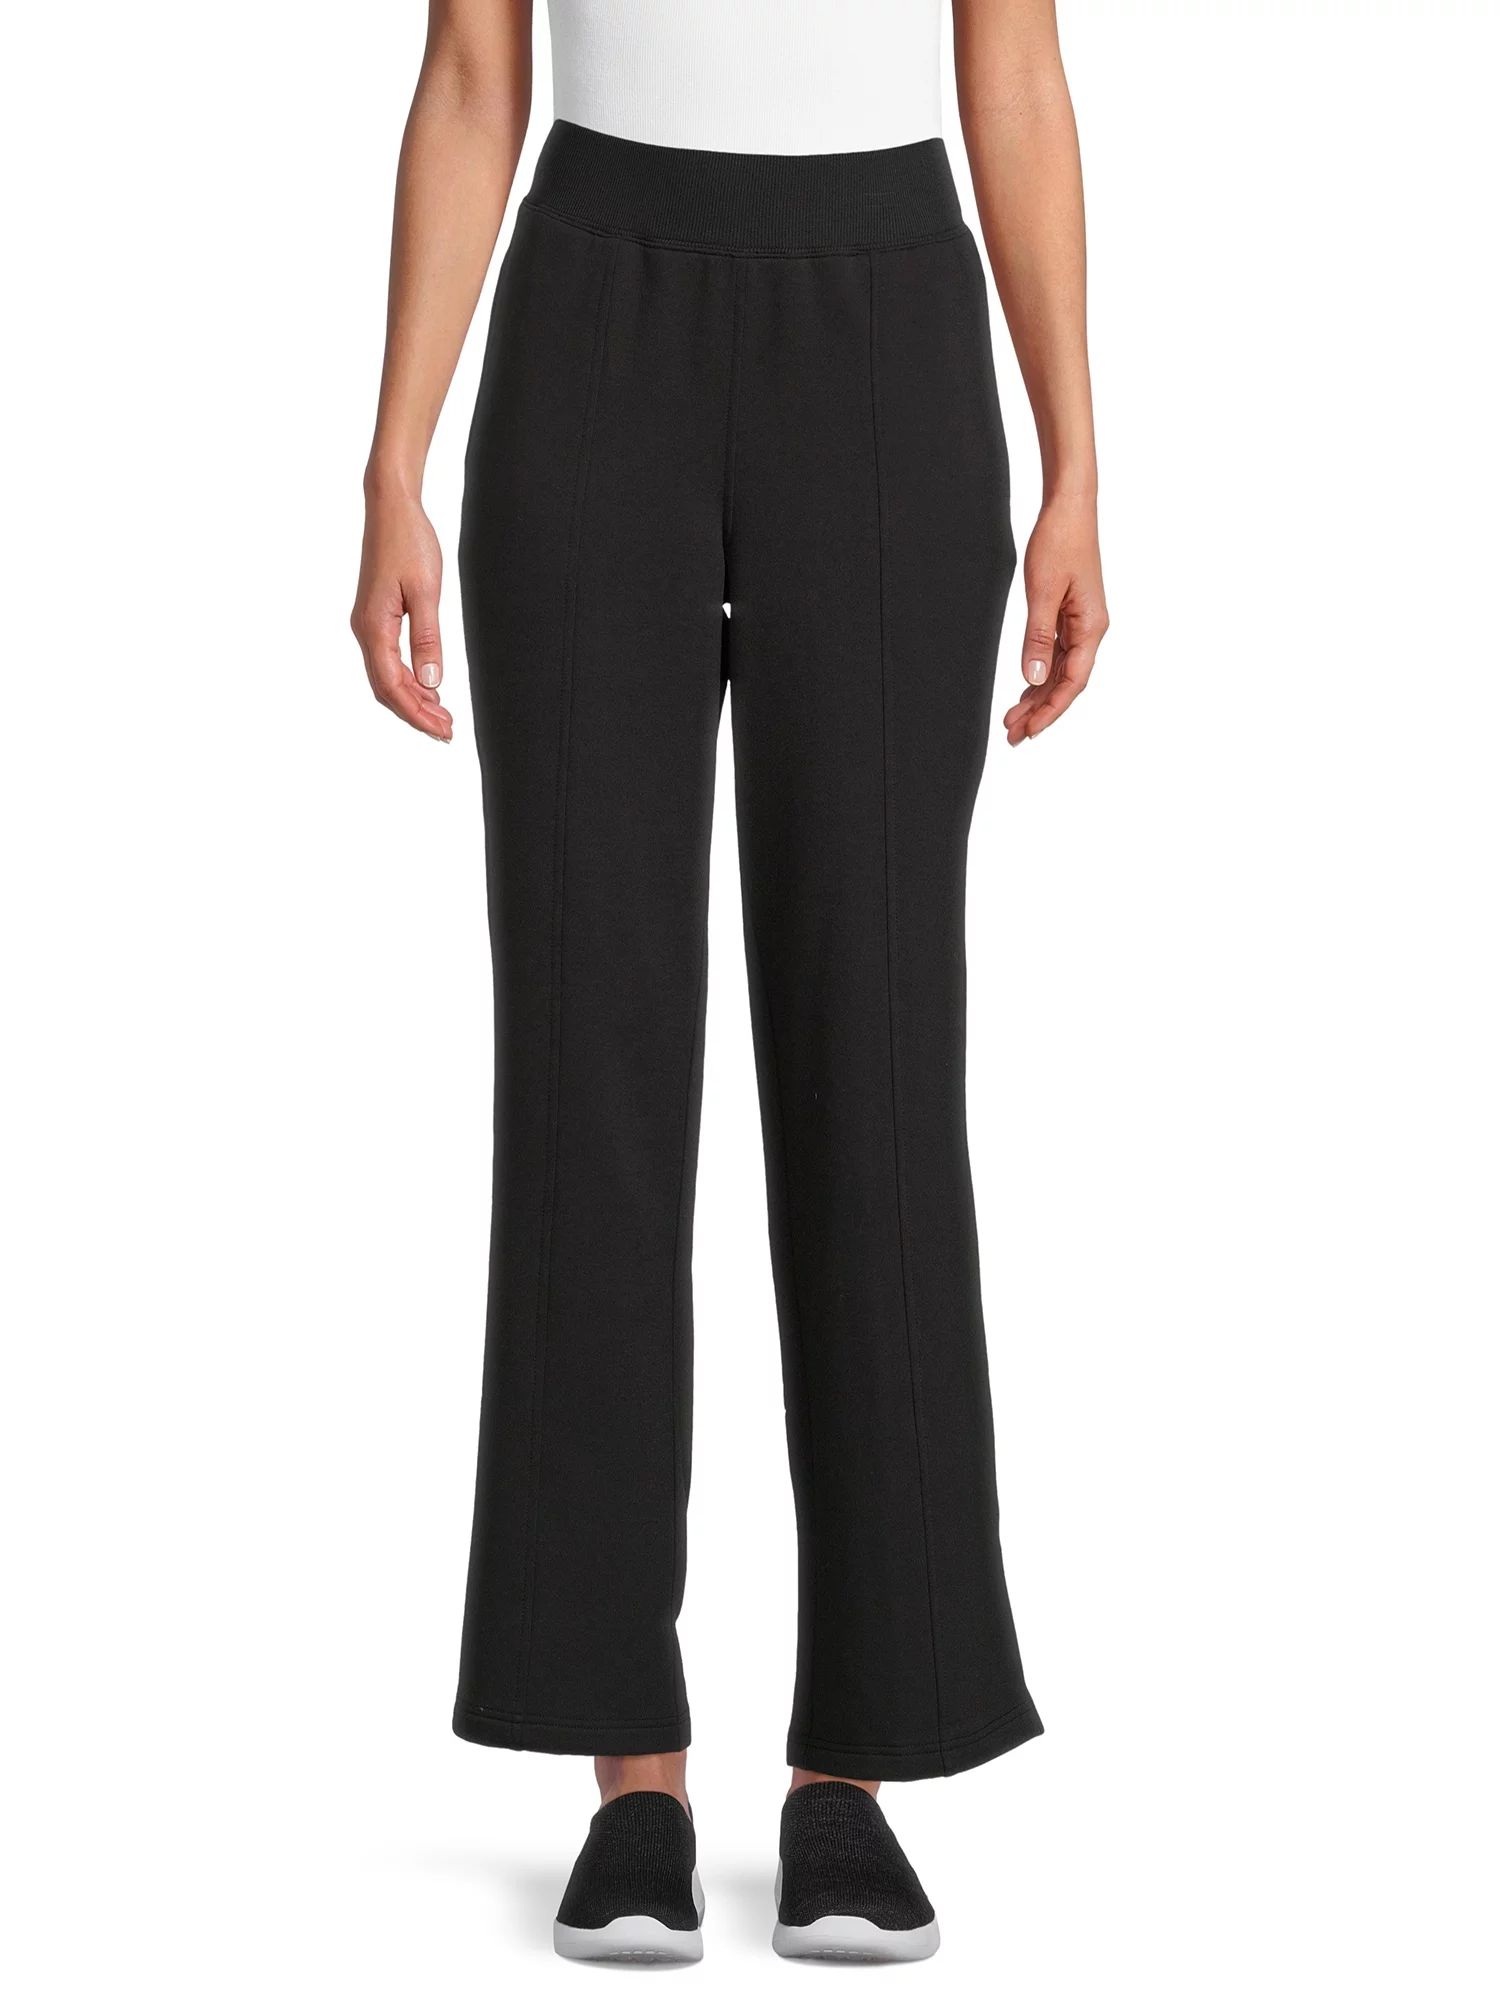 Avia Women’s Athleisure Plush Fleece Pants, 31" Inseam, Sizes XS-XXXL | Walmart (US)